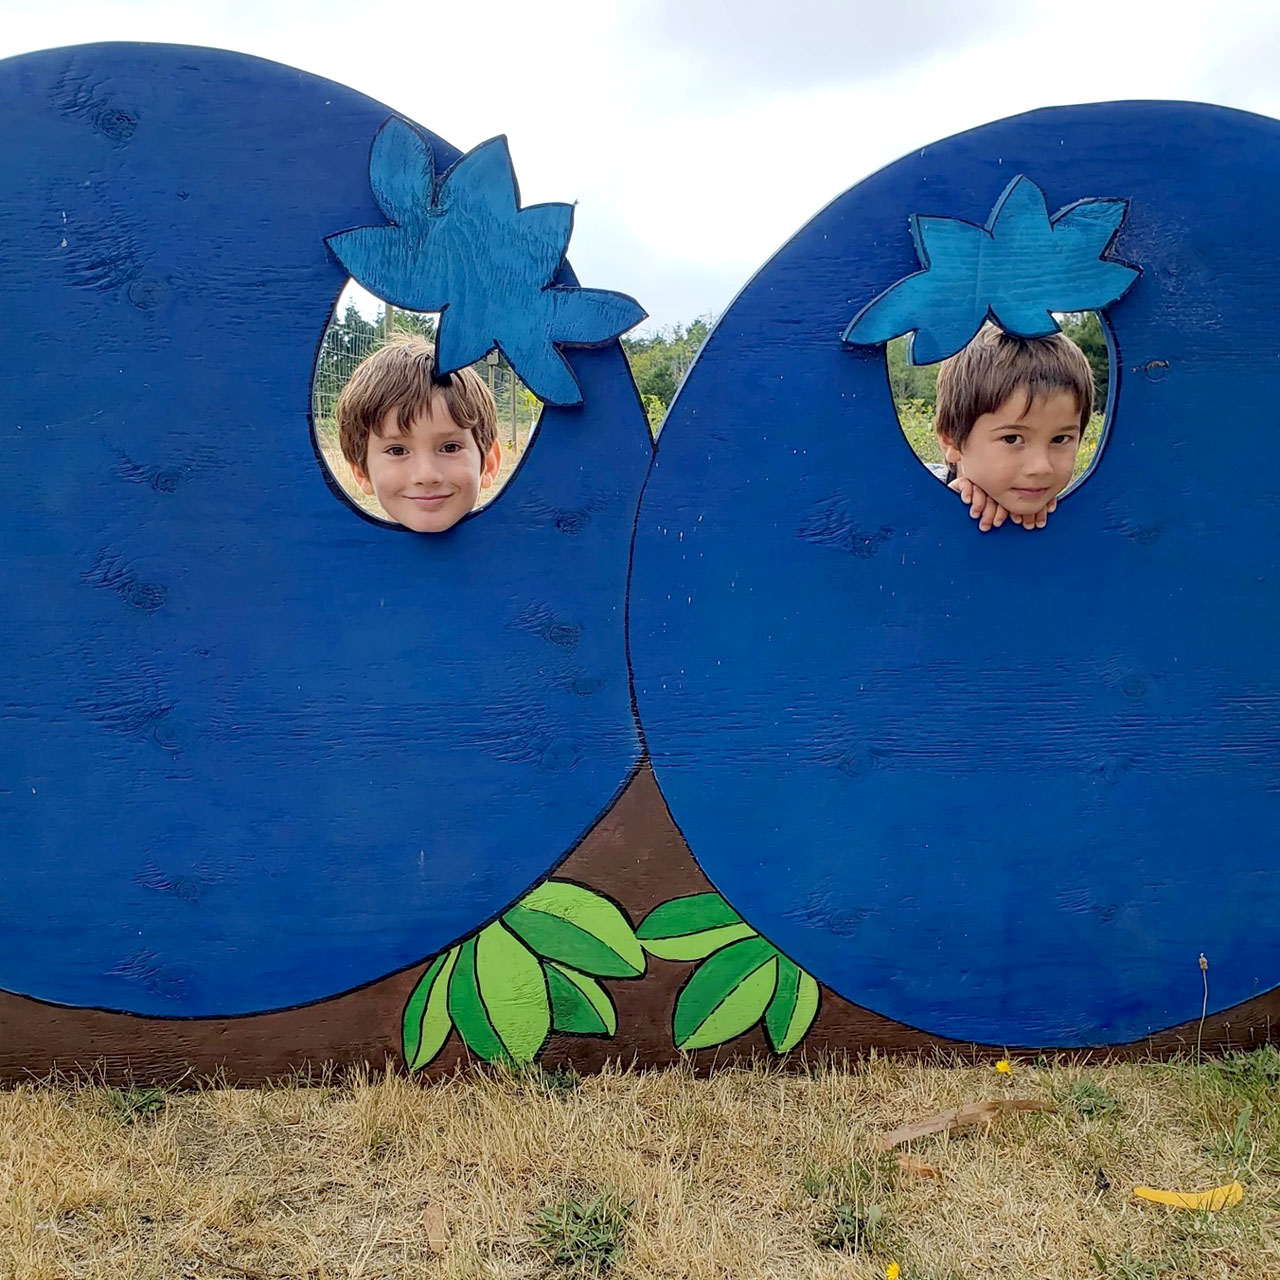 Kids-in-Blueberries-Valentine-Blueberries-Langlois-Oregon.jpg